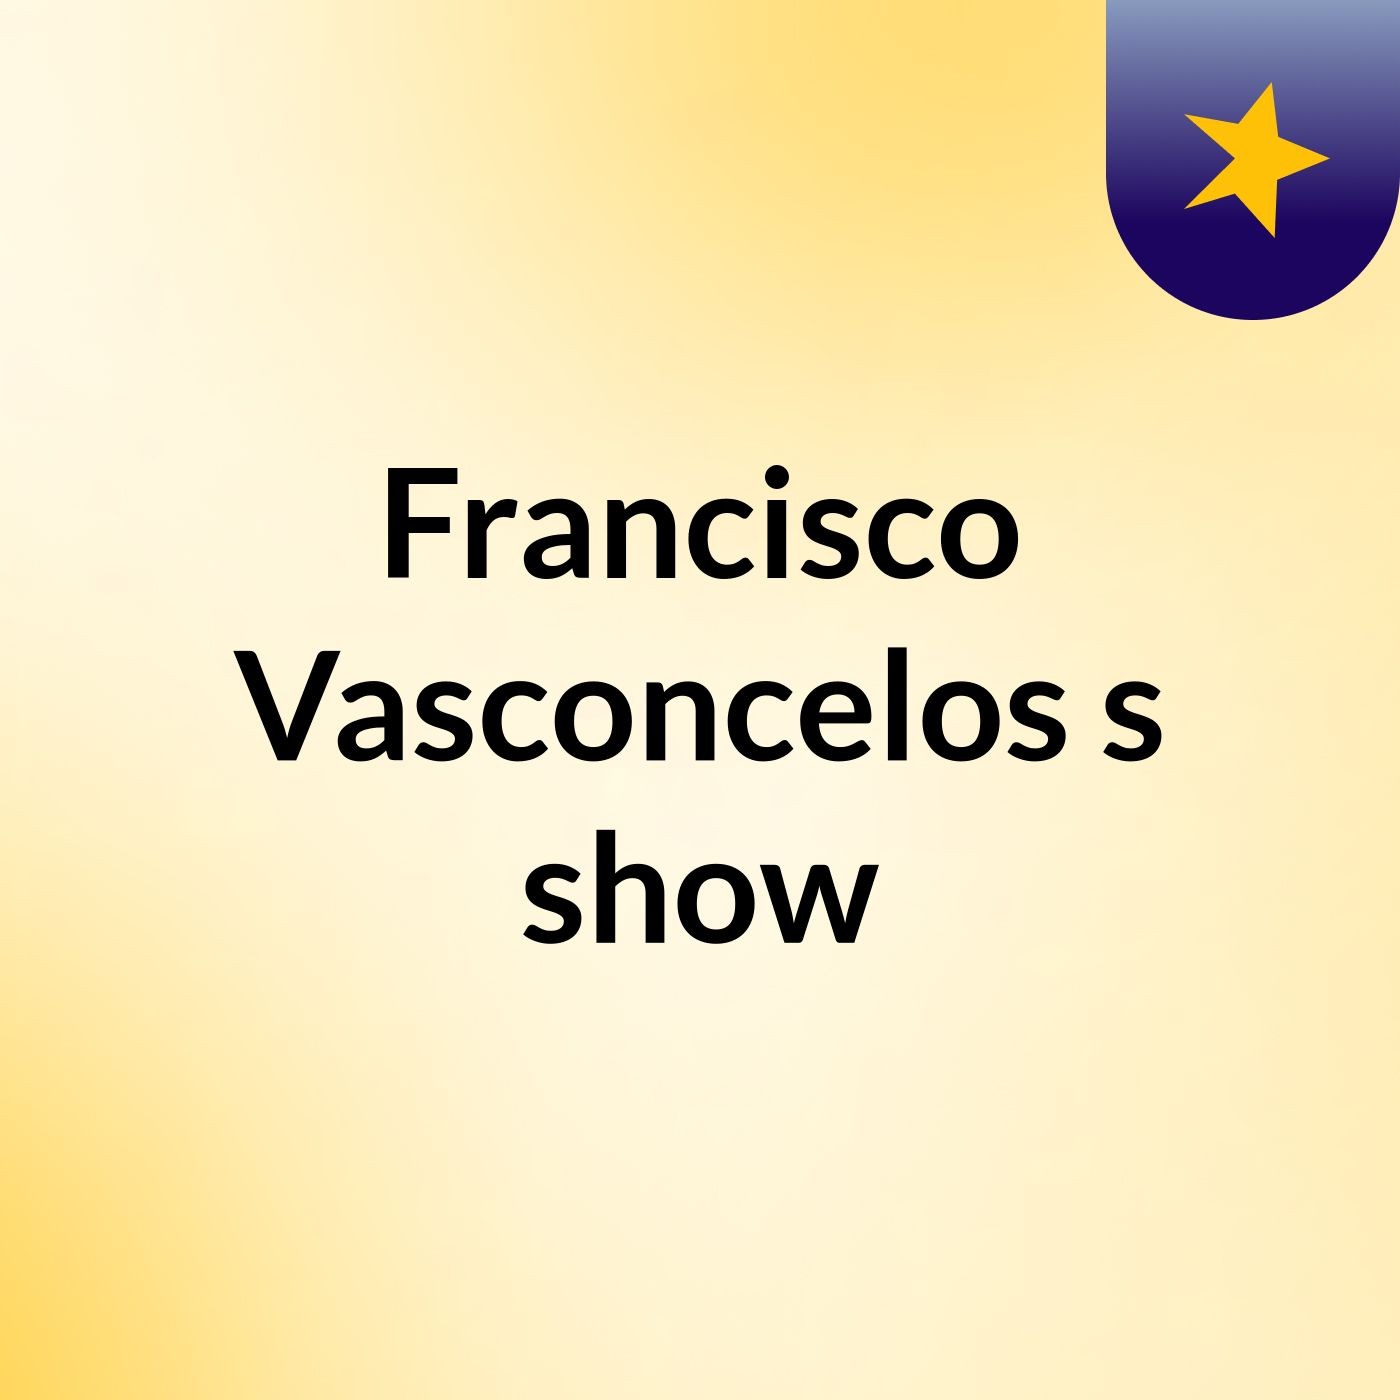 Francisco Vasconcelos's show